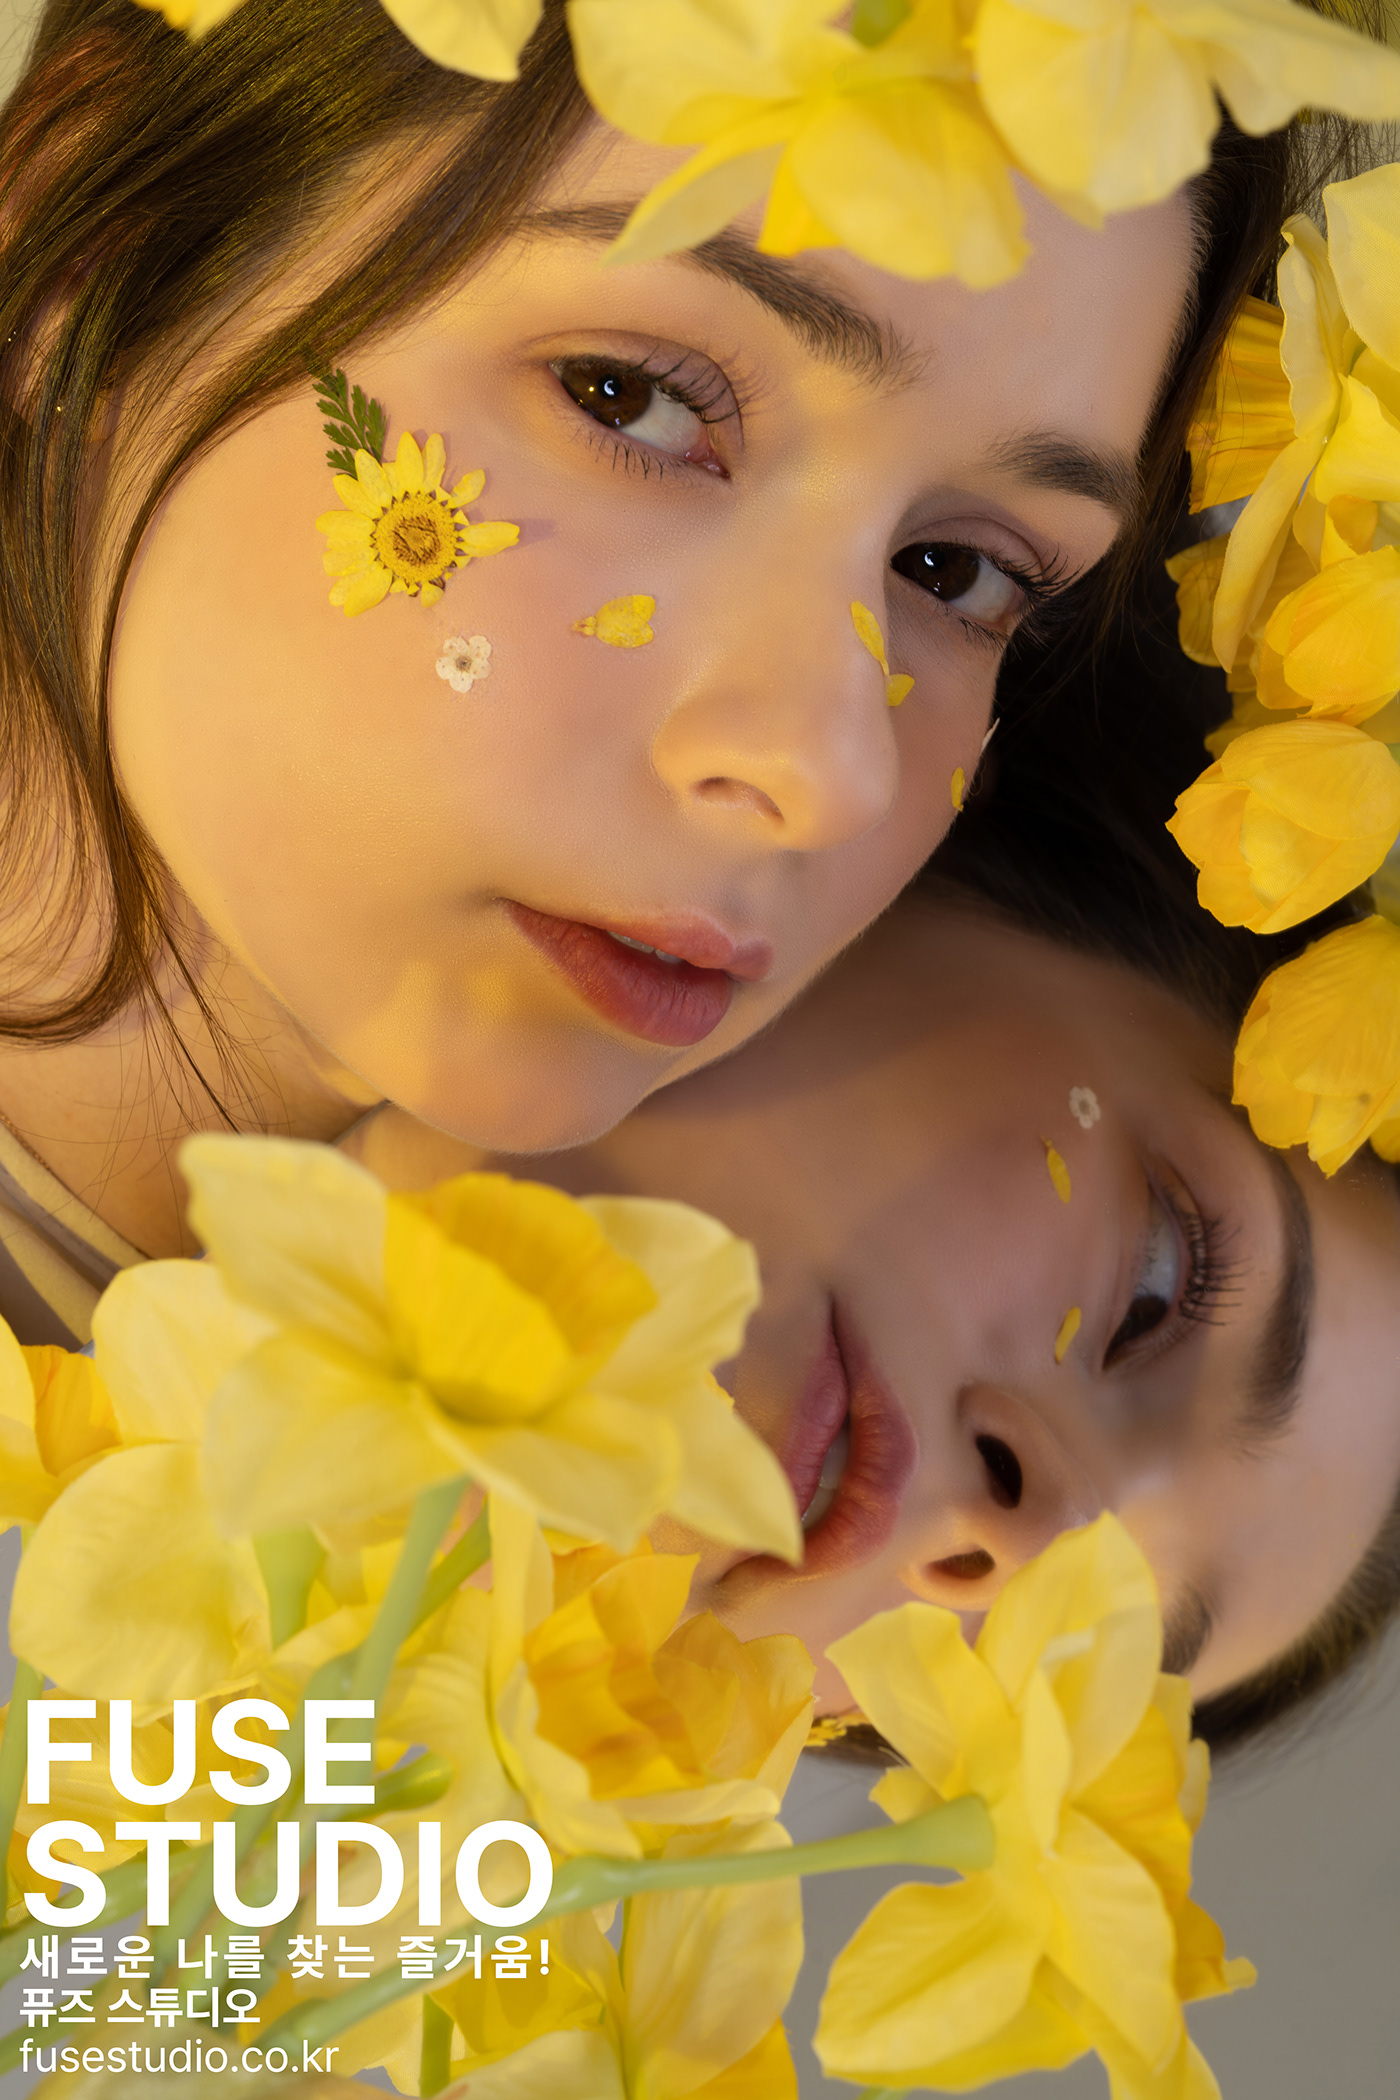 daffodil narcissist narcissism floral profile portrait photoshoot beauty model